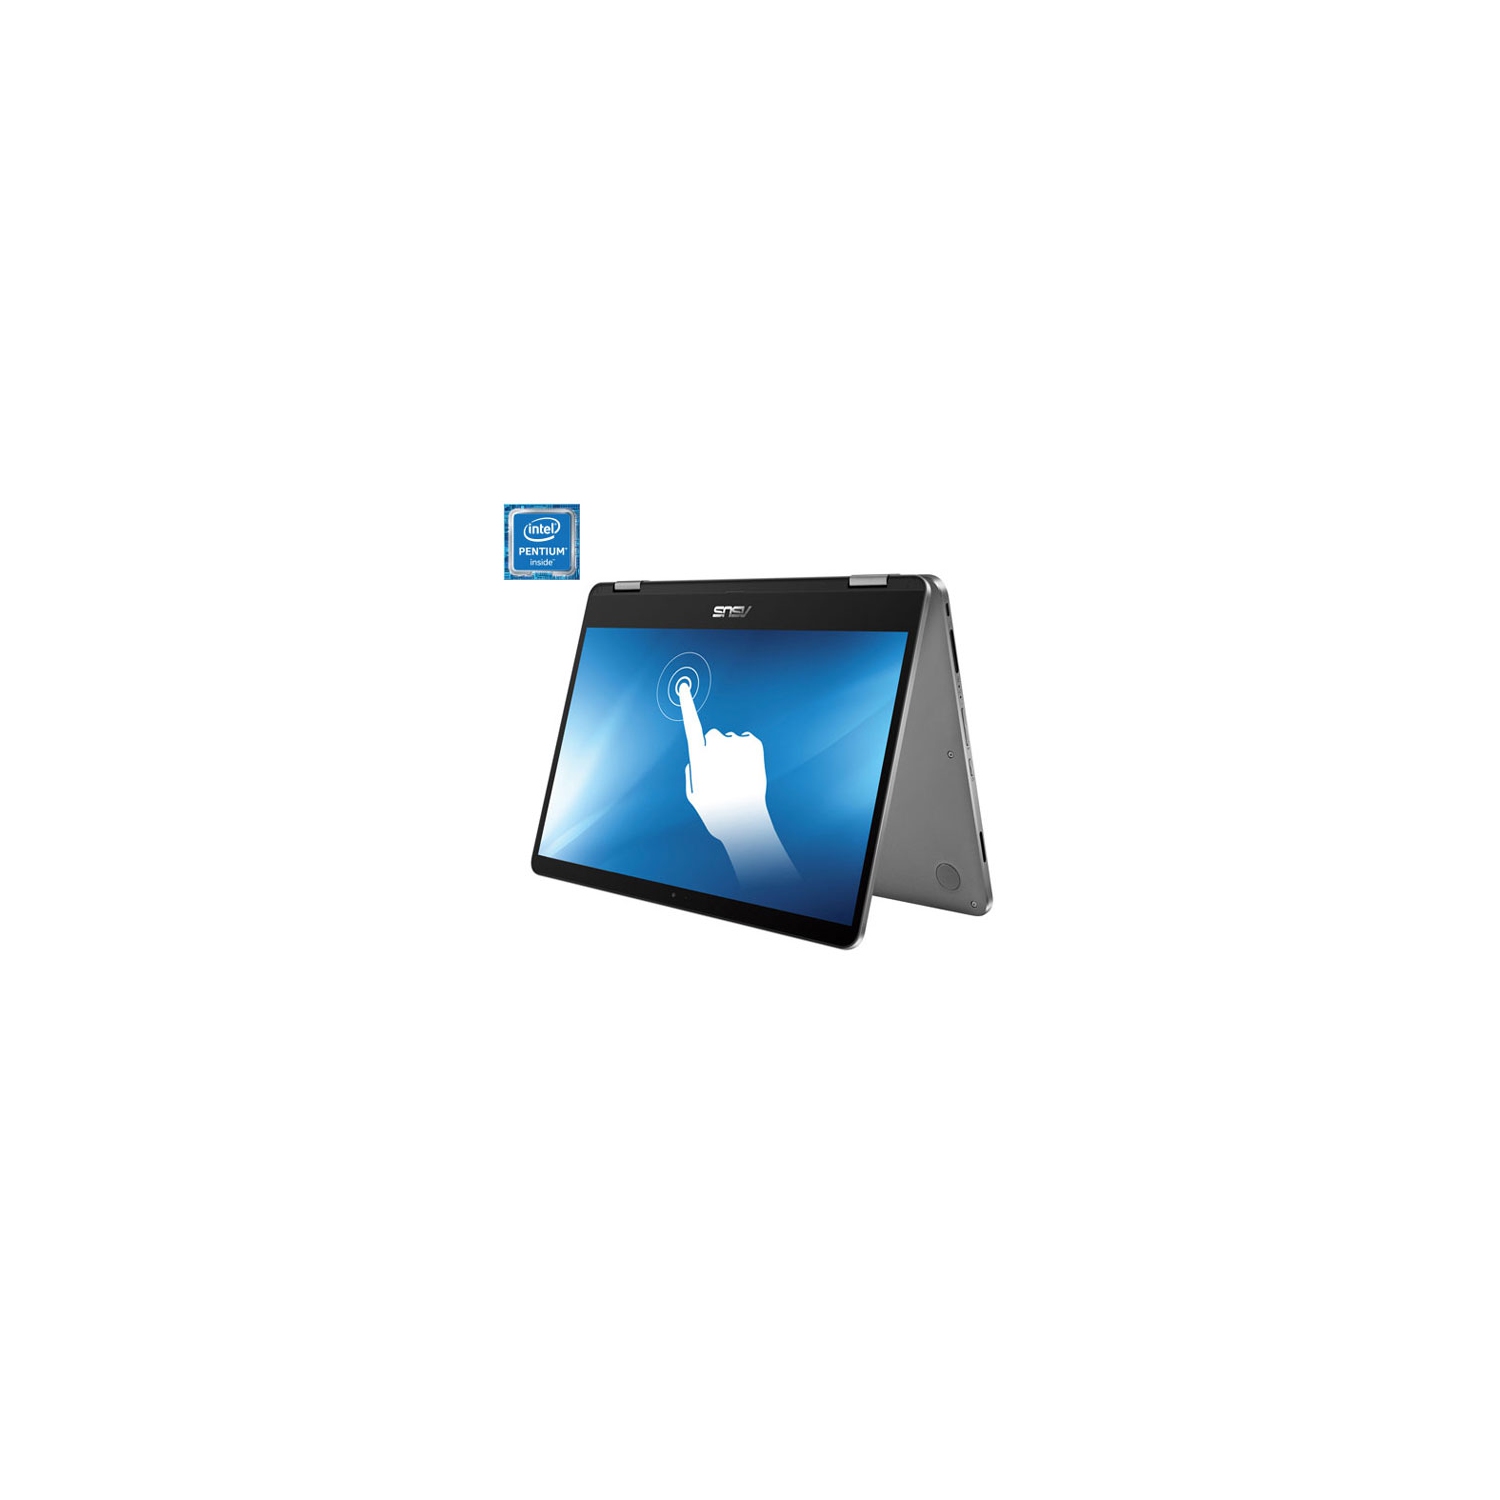 Refurbished (Fair) - ASUS VivoBook Flip 14" 2-in-1 Laptop (Intel/128GB SSD/4GB RAM/Win 10S)